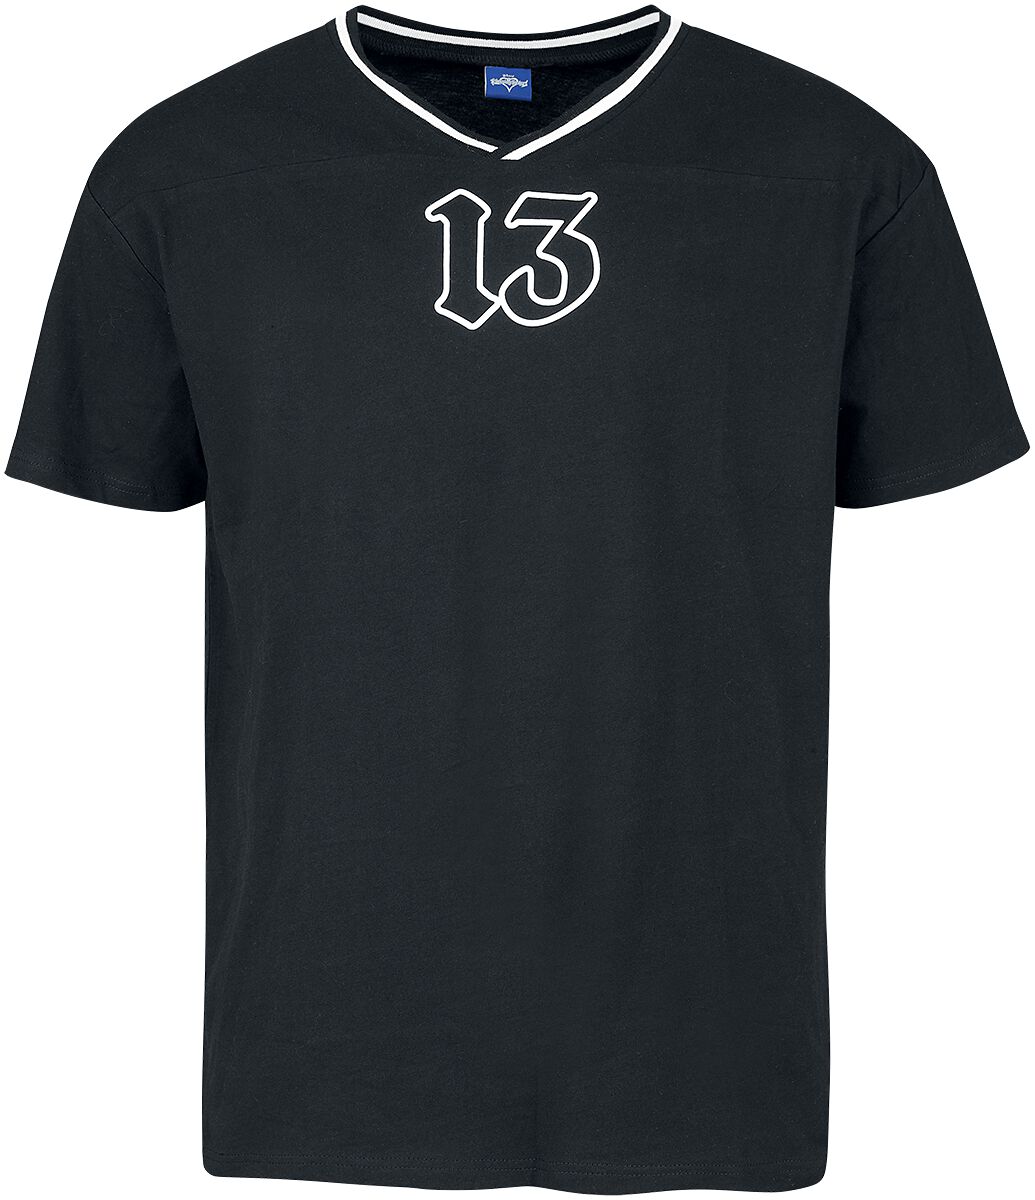 Kingdom Hearts Organisation XIII T-Shirt schwarz in XXL